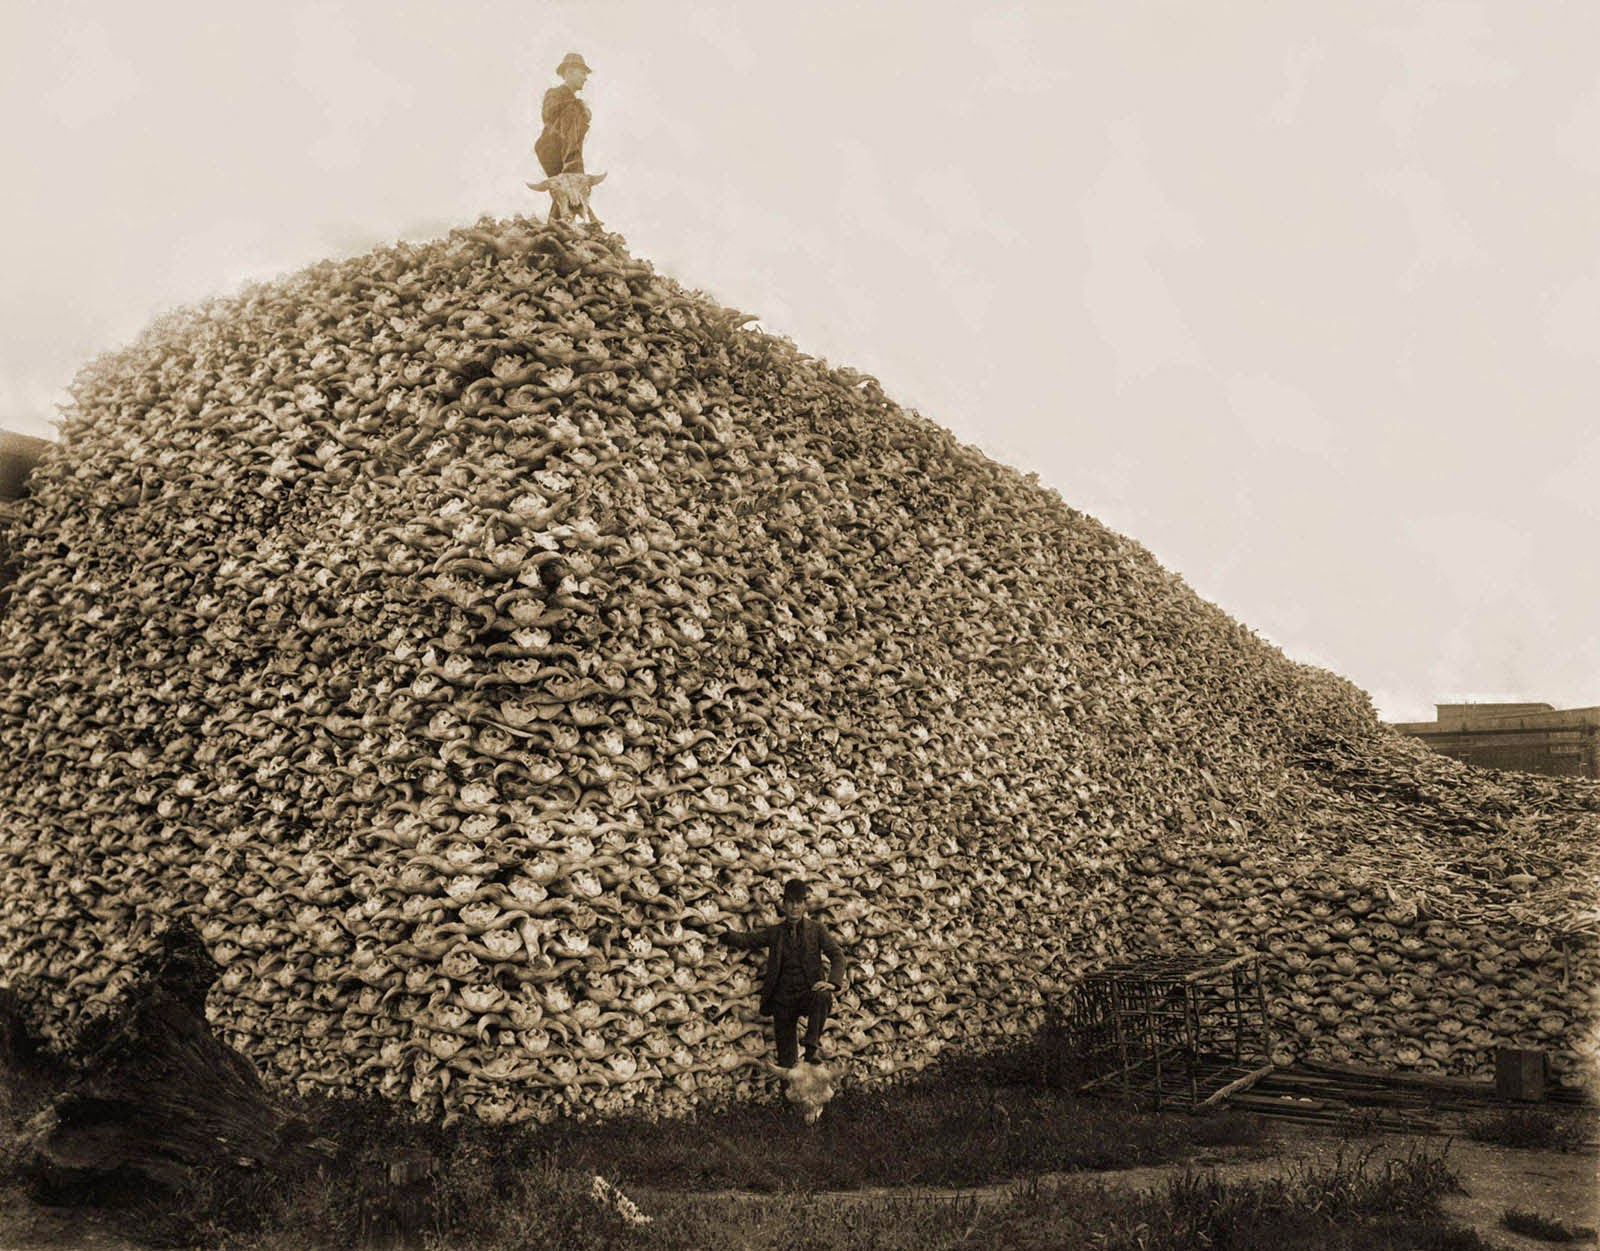 A mountain of buffalo skulls